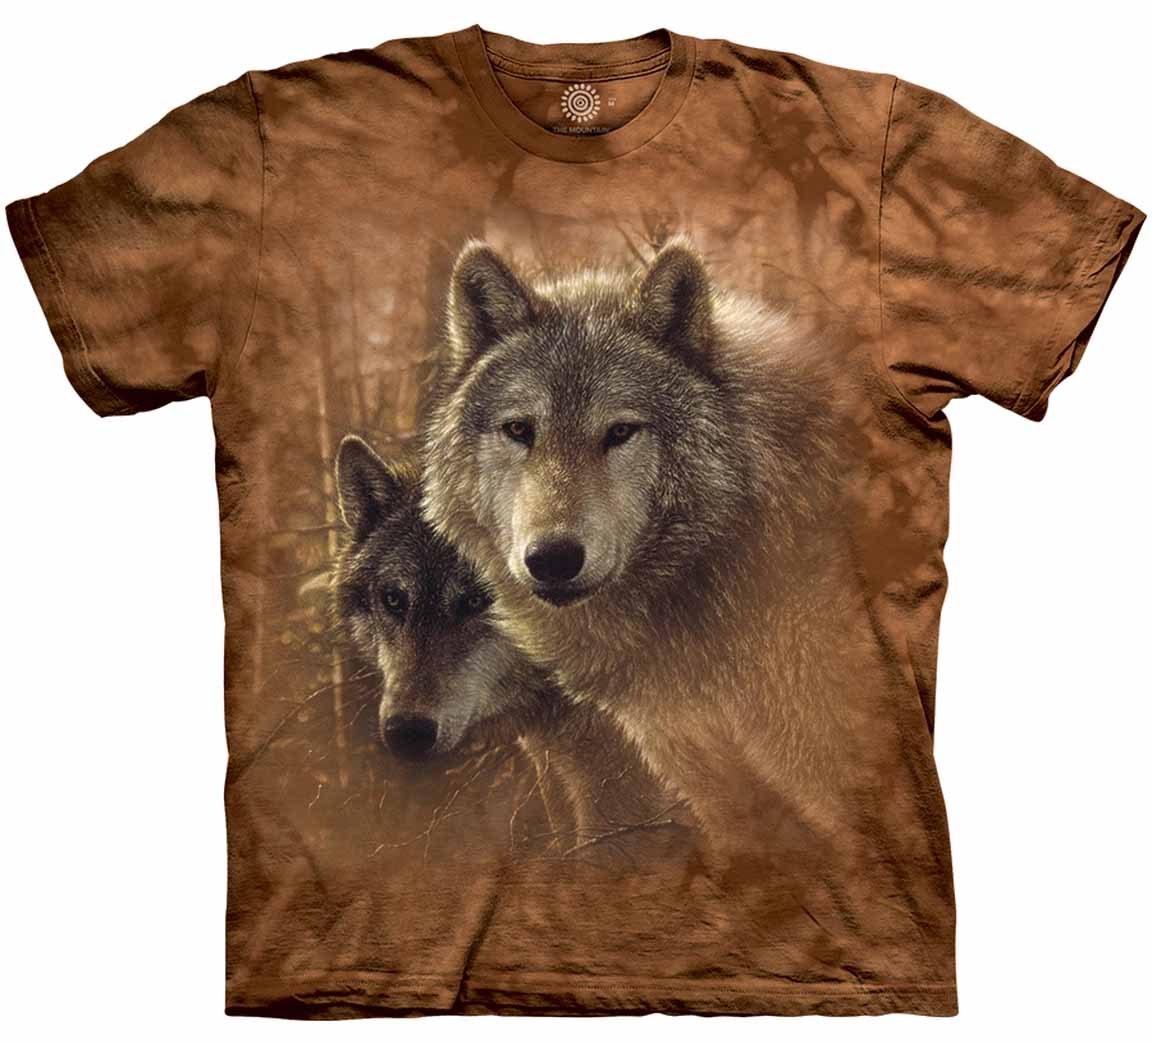 Wolf T Shirts & Wolfpack Shirts | Nature's Habitat